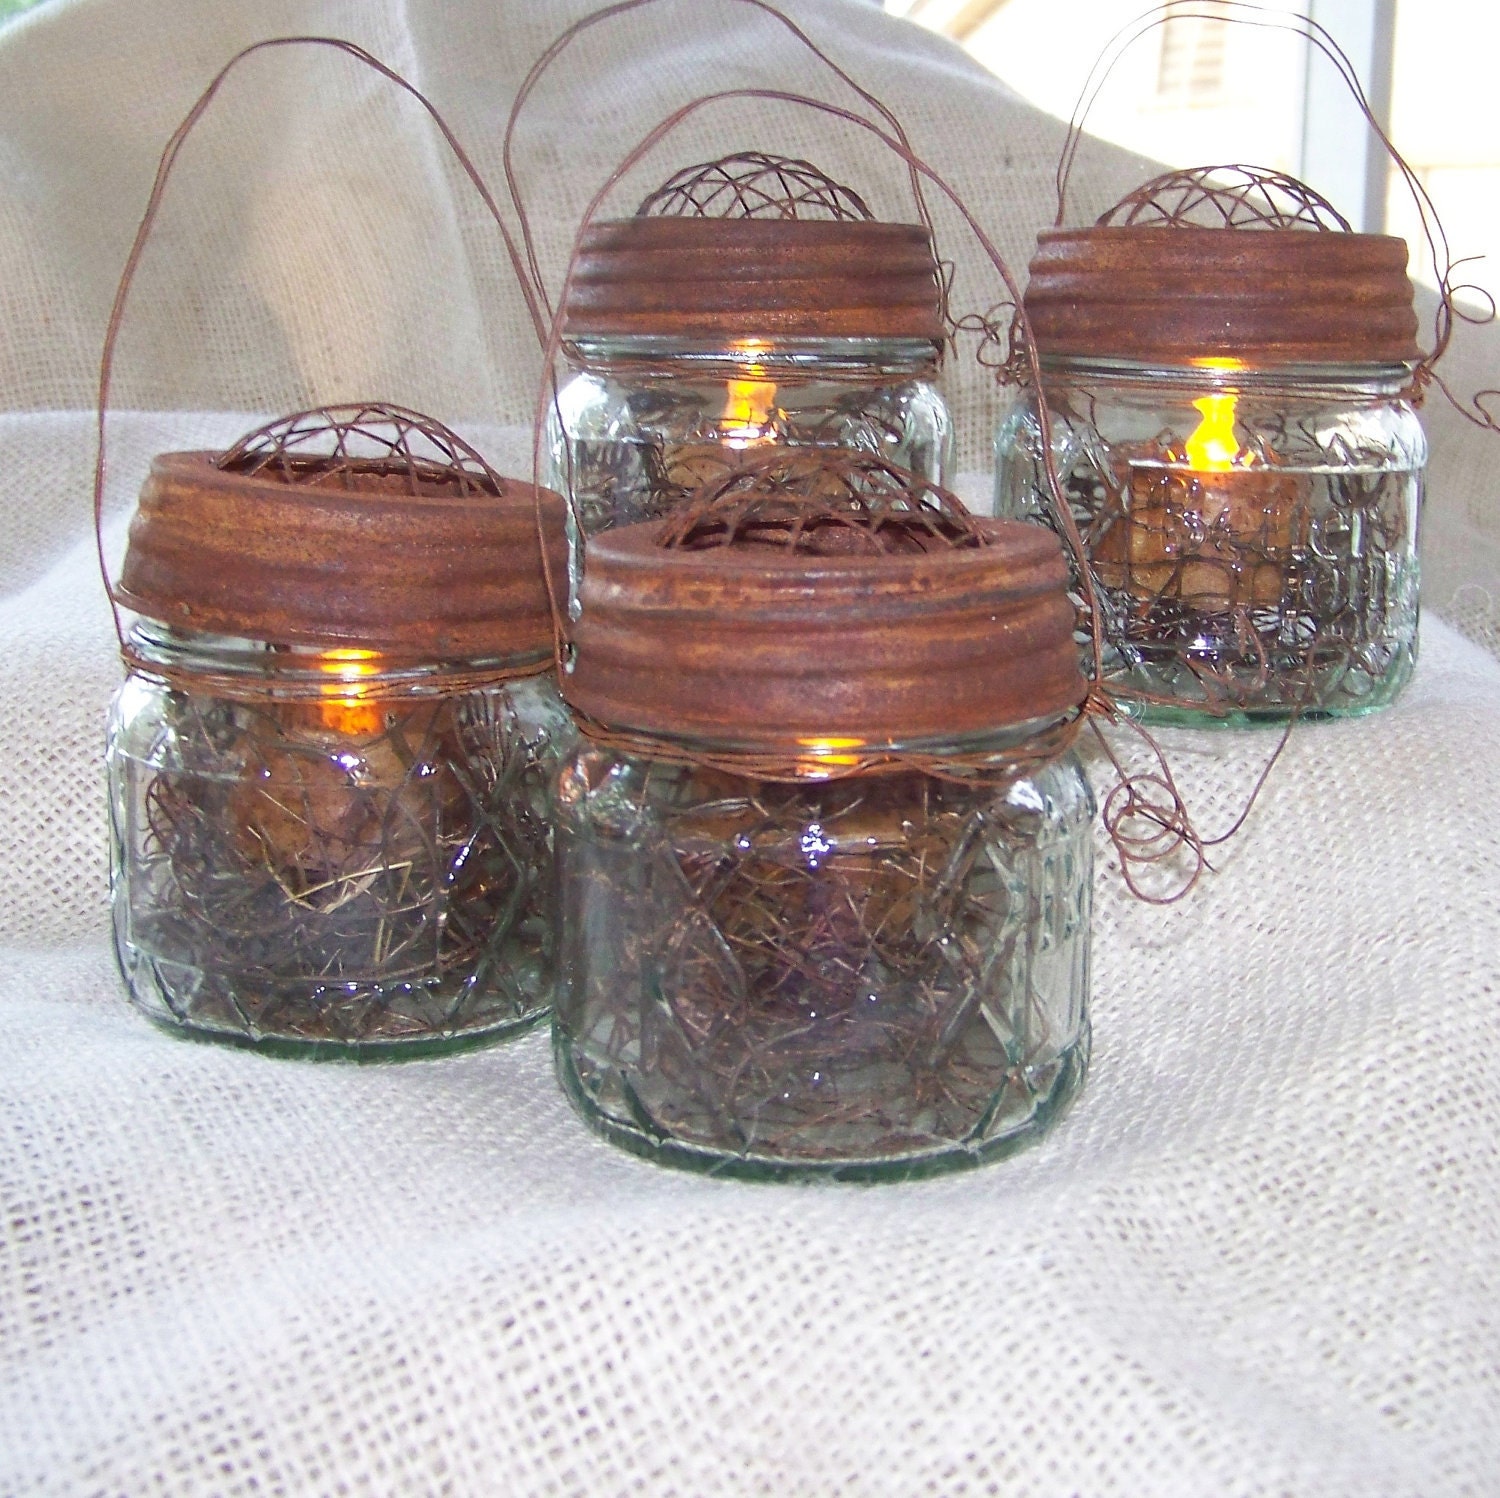 4 Rustic Mason Jar Lights-Wedding Hanging Jar Tea Lights with Rusty Lids and Handle